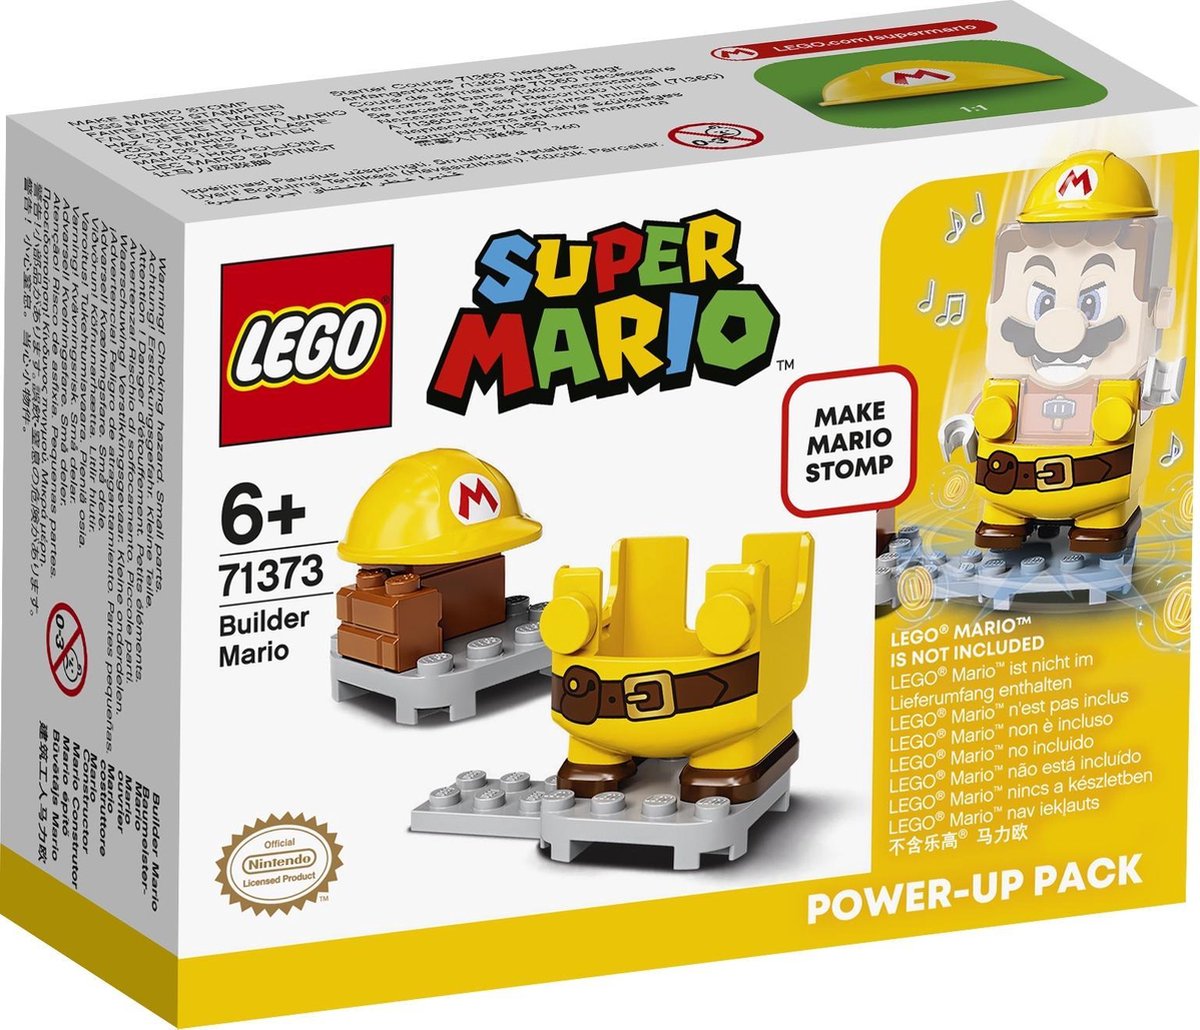   Super Mario Power-Up Pakket Bouw Mario - 71373